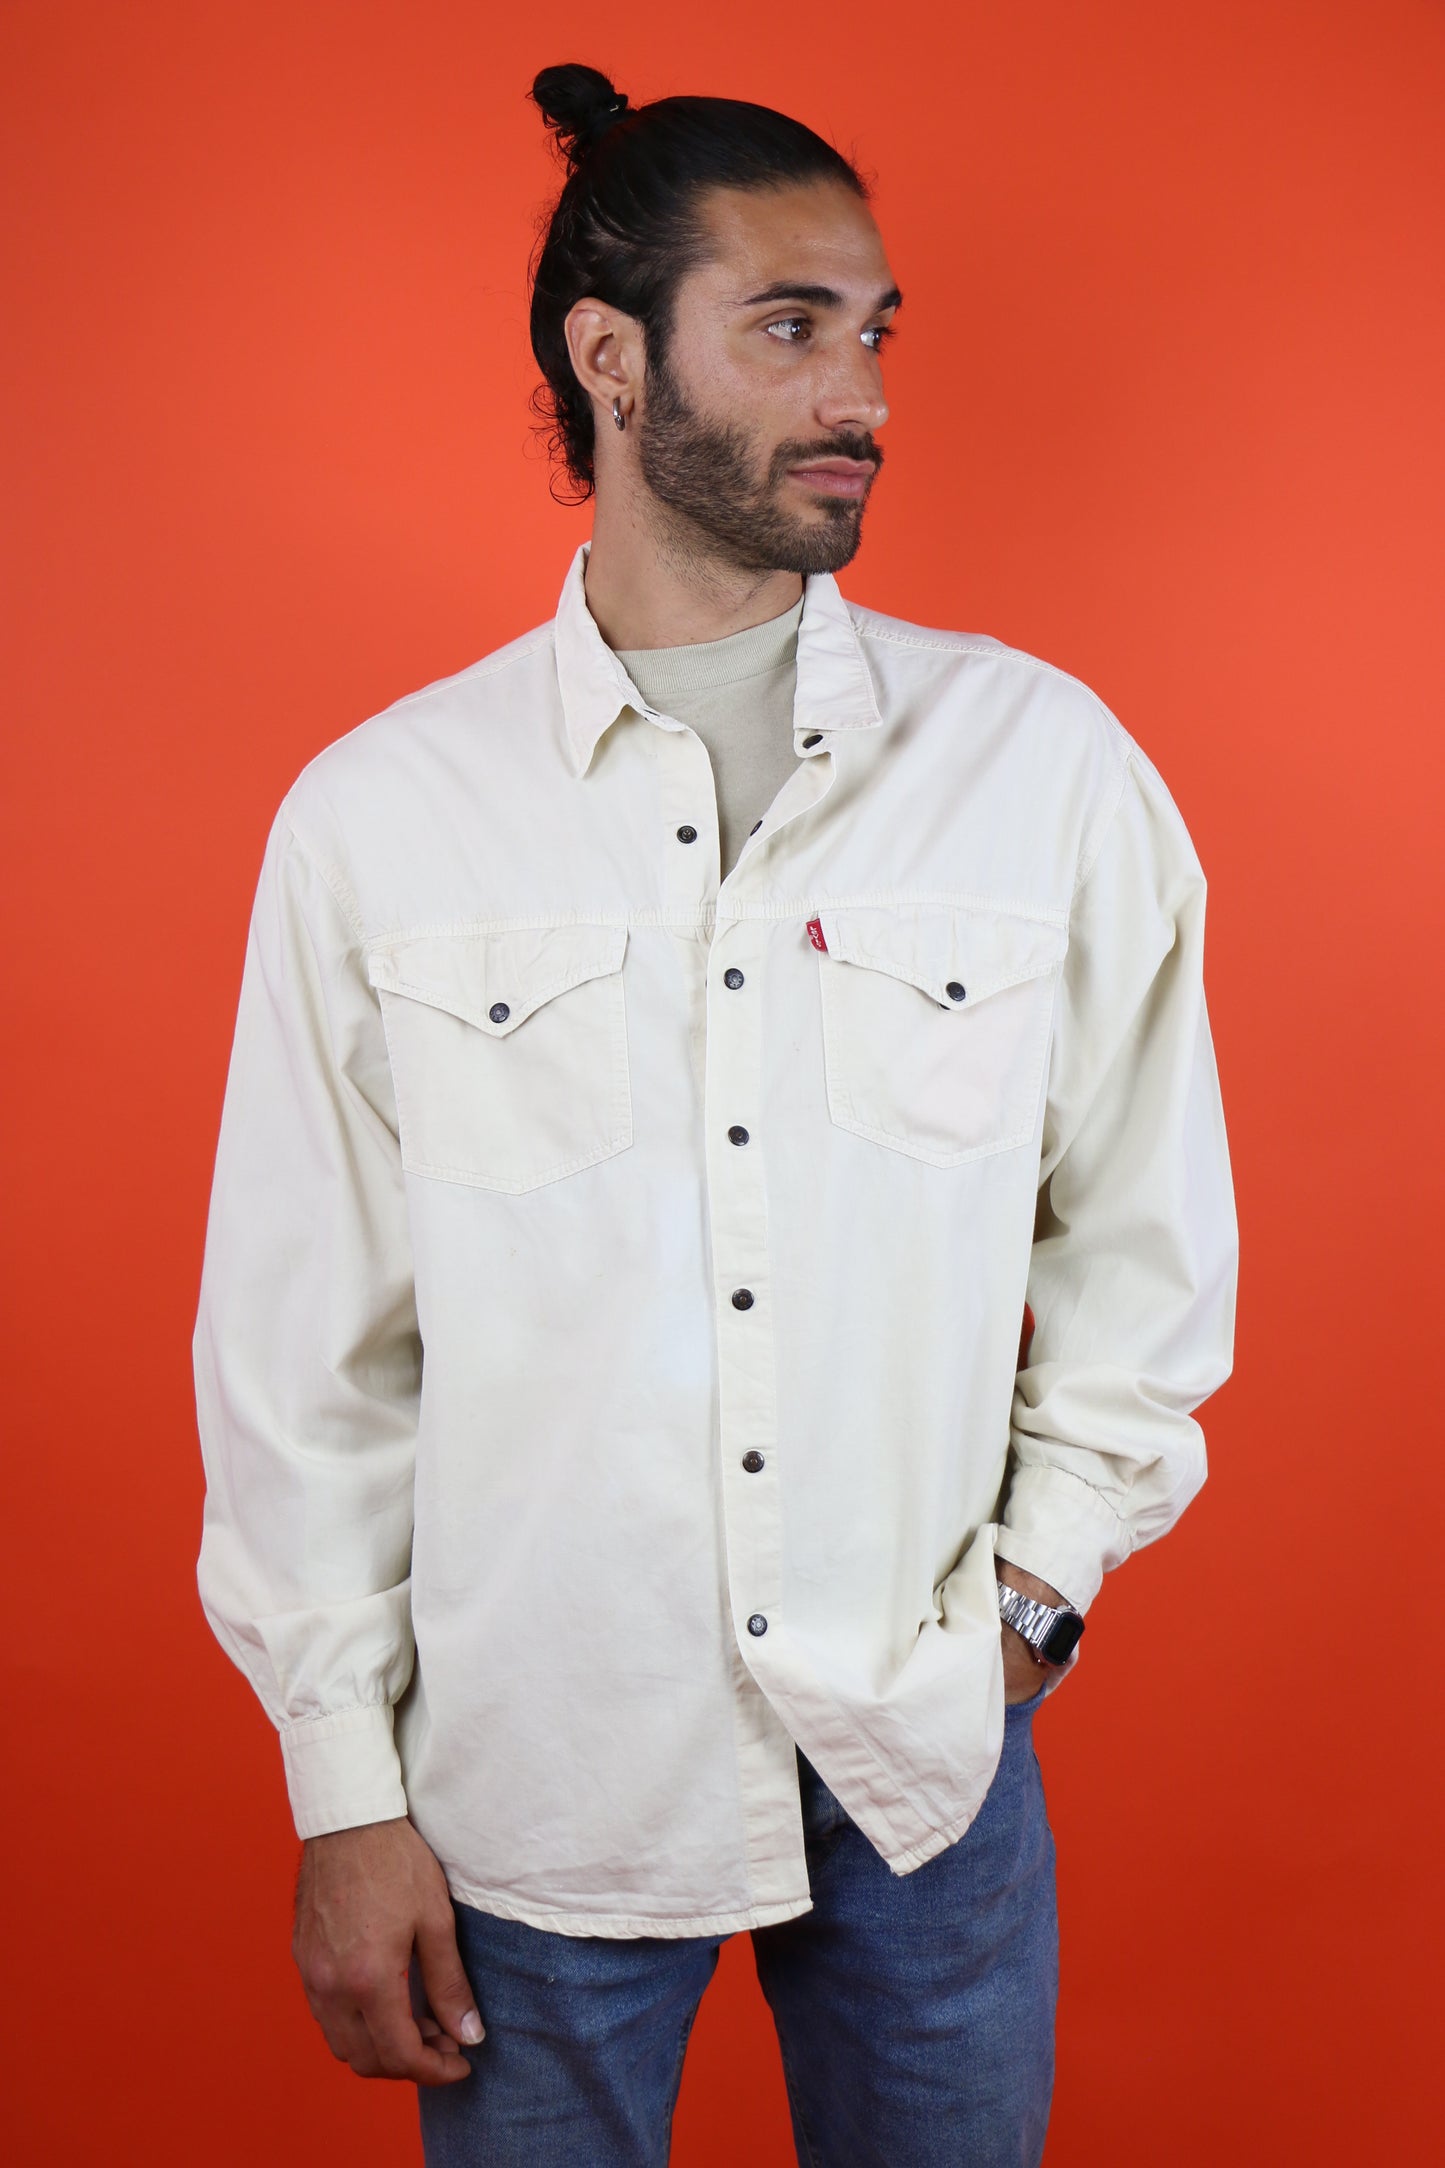 Levis White Denim Shirt - vintage clothing clochard92.com